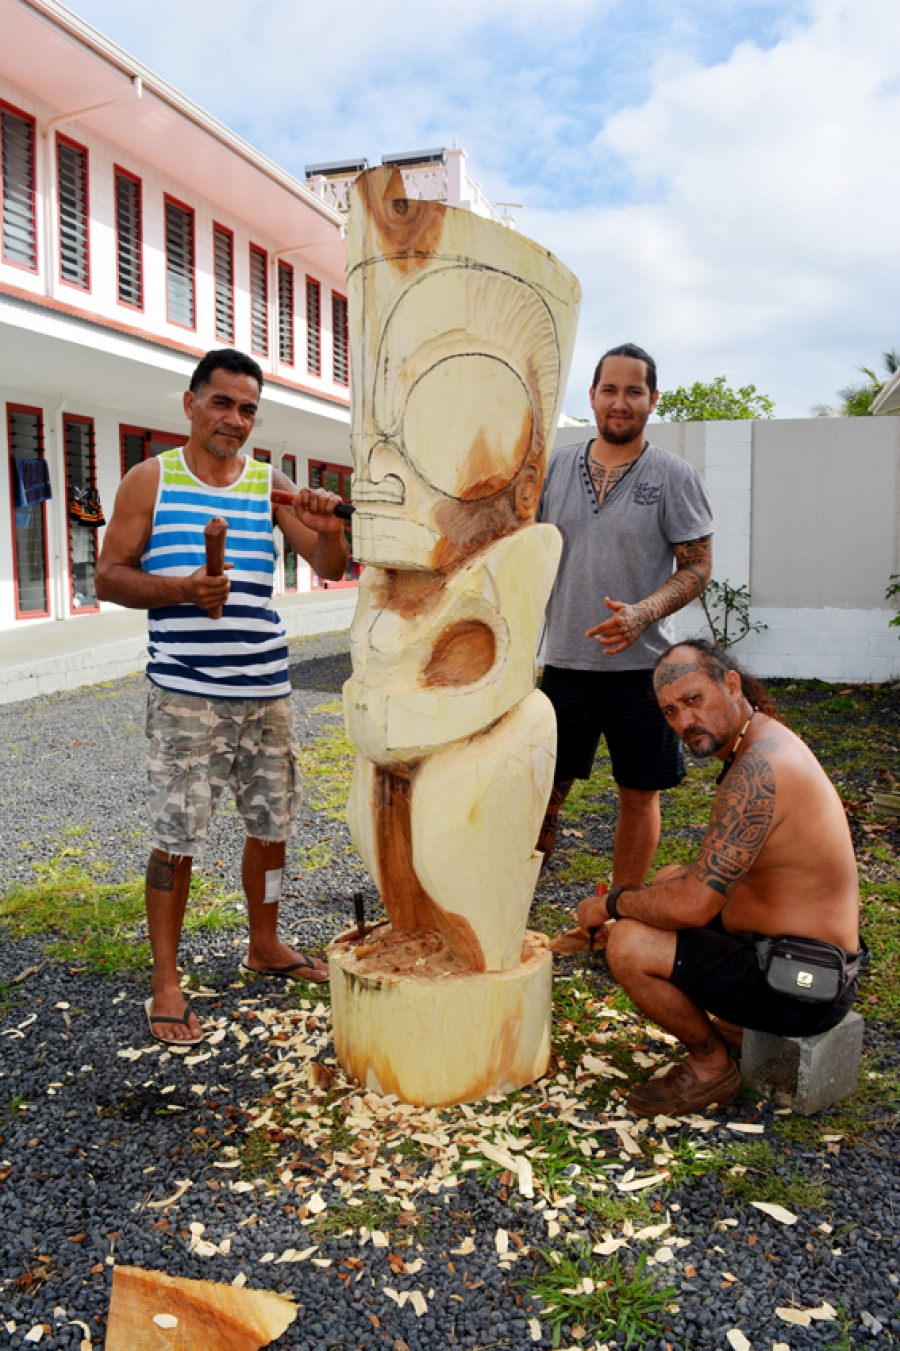 Island visitors show off their cultural talents